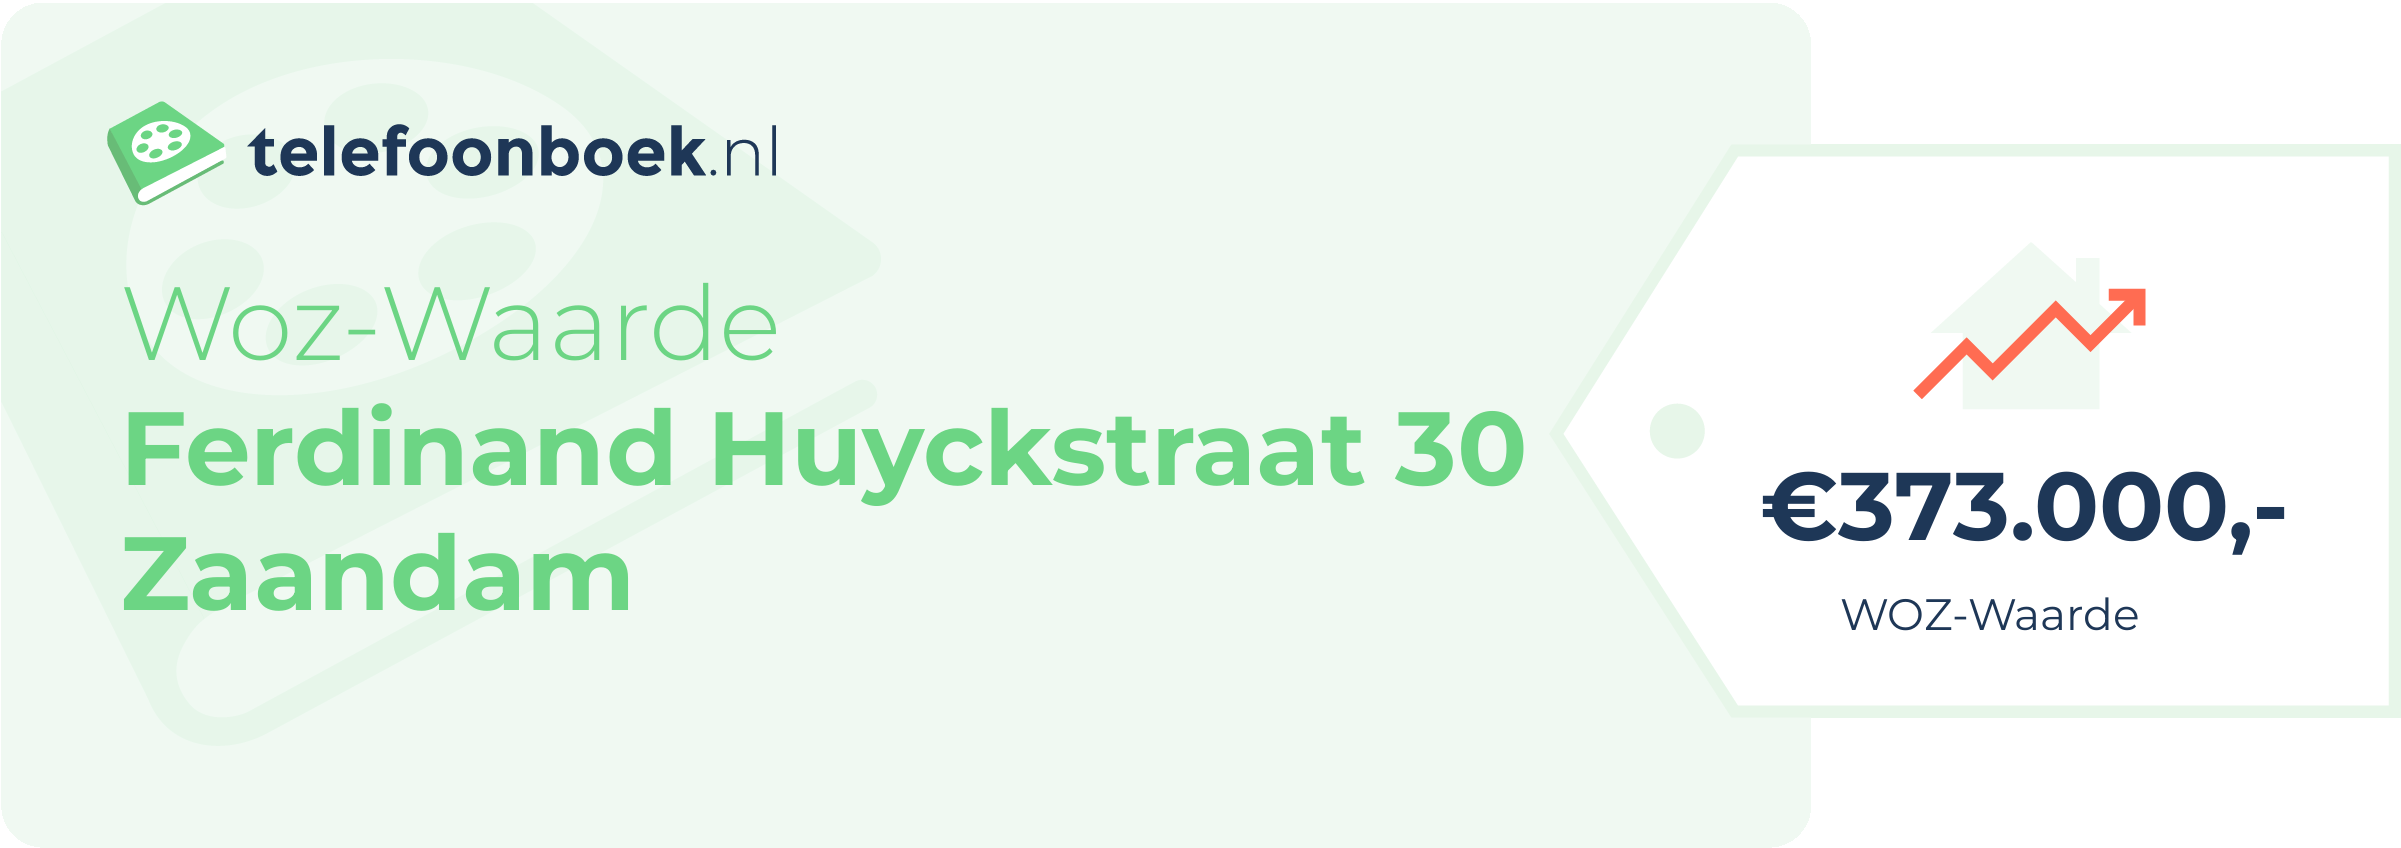 WOZ-waarde Ferdinand Huyckstraat 30 Zaandam